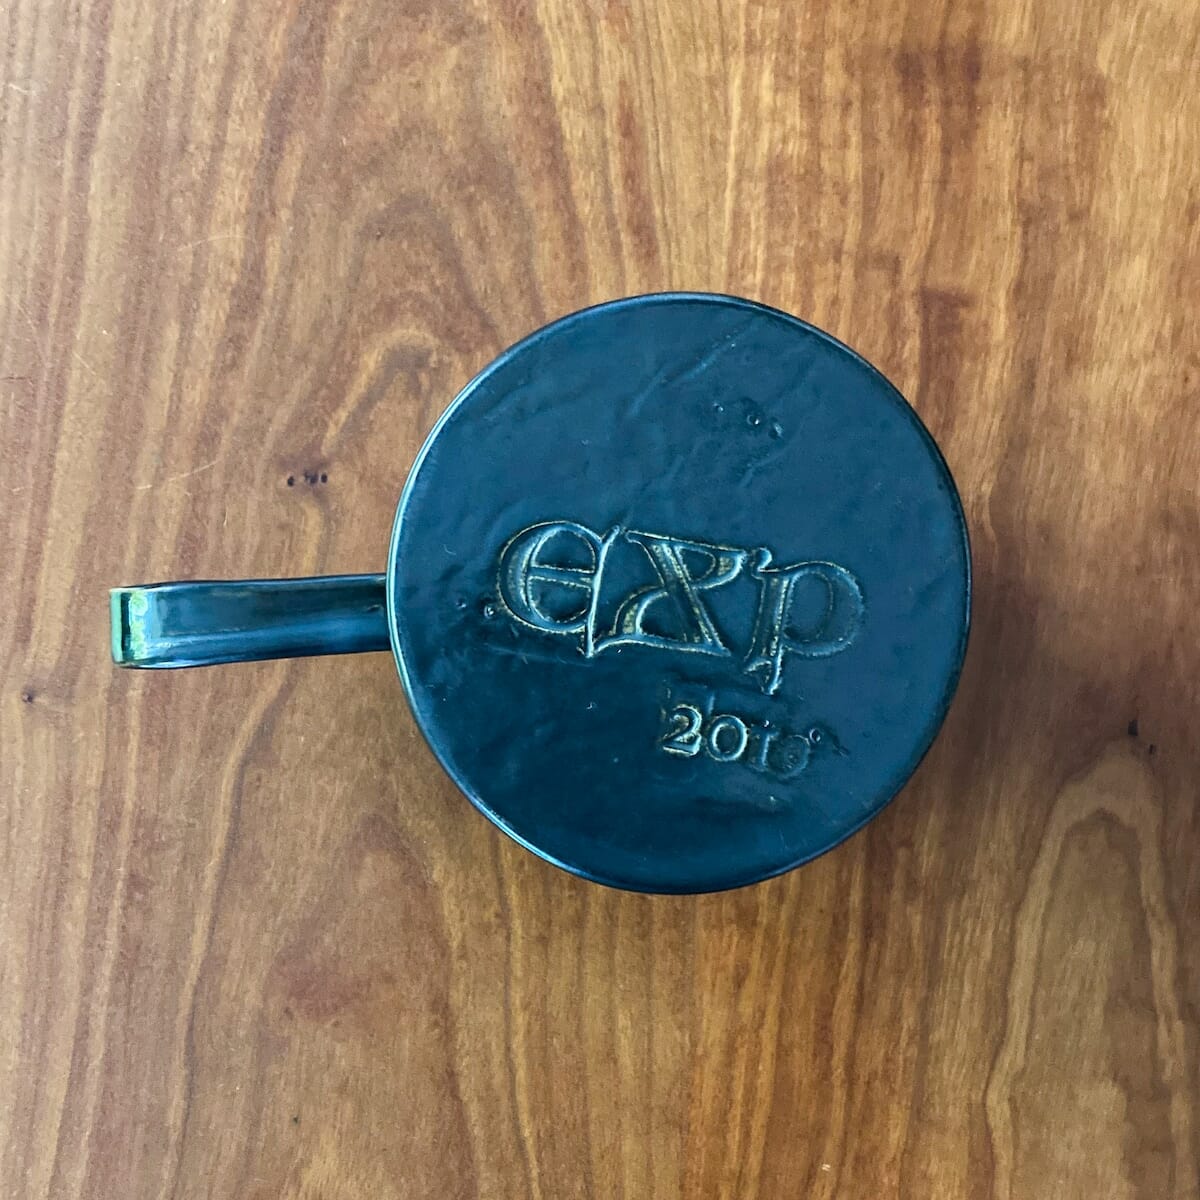 〈Echo Park Pottery〉のマグカップ